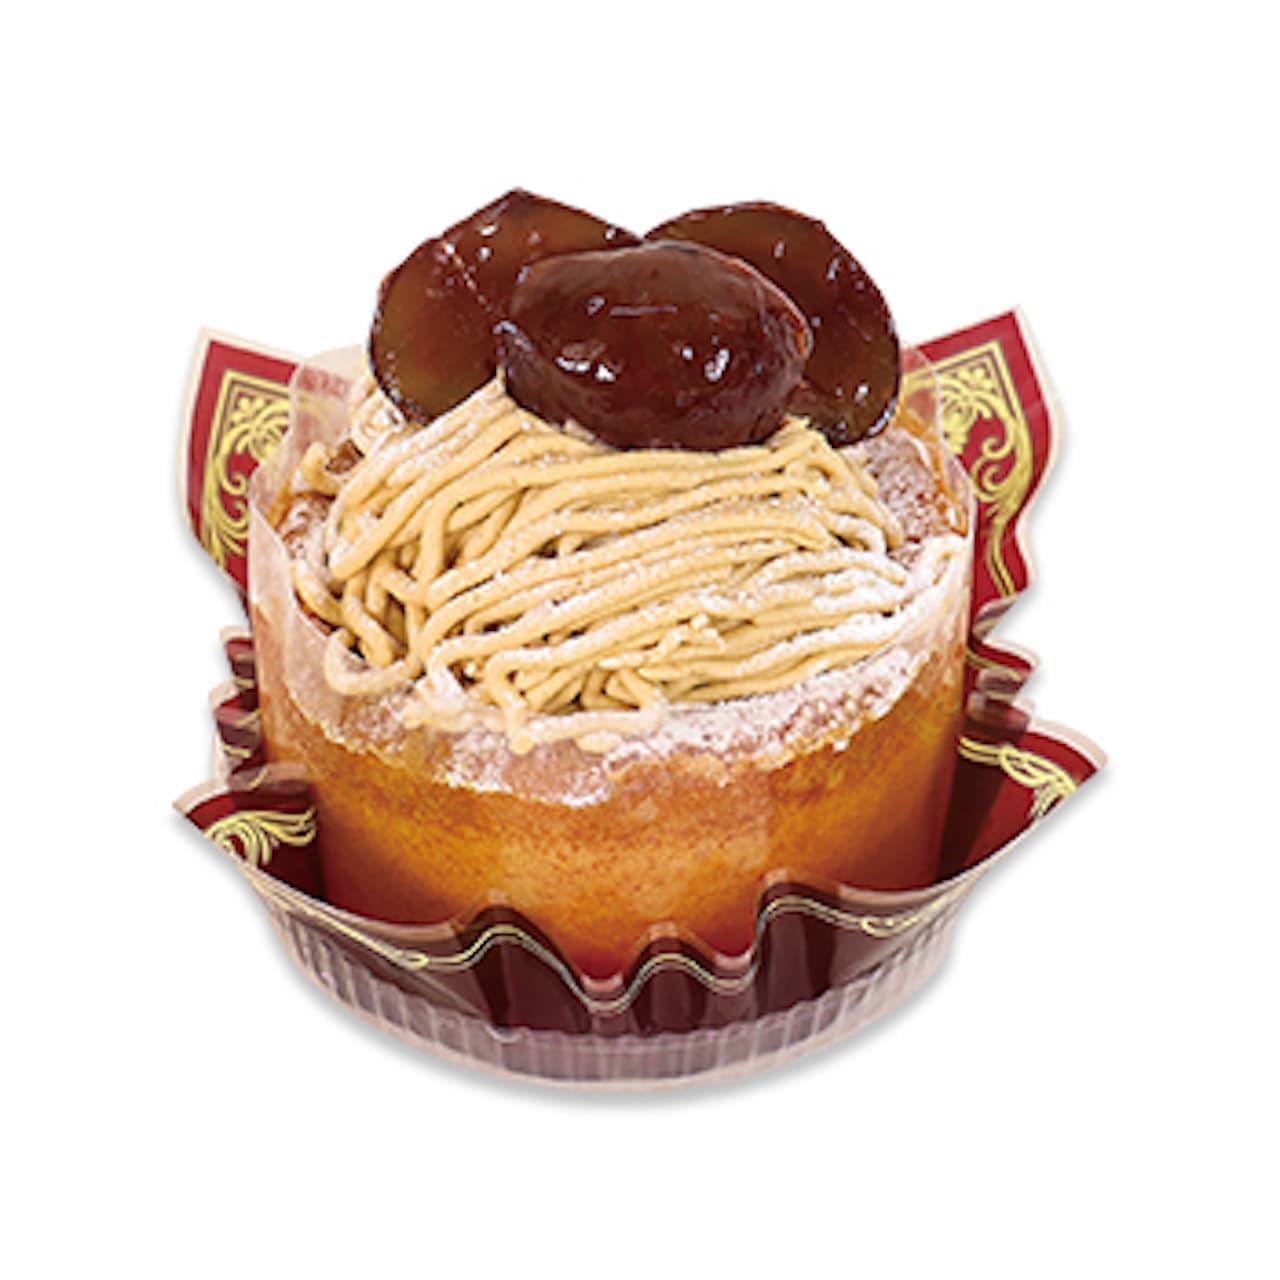 Fujiya "Fujiya Chiffon Cake (Japanese chestnut)